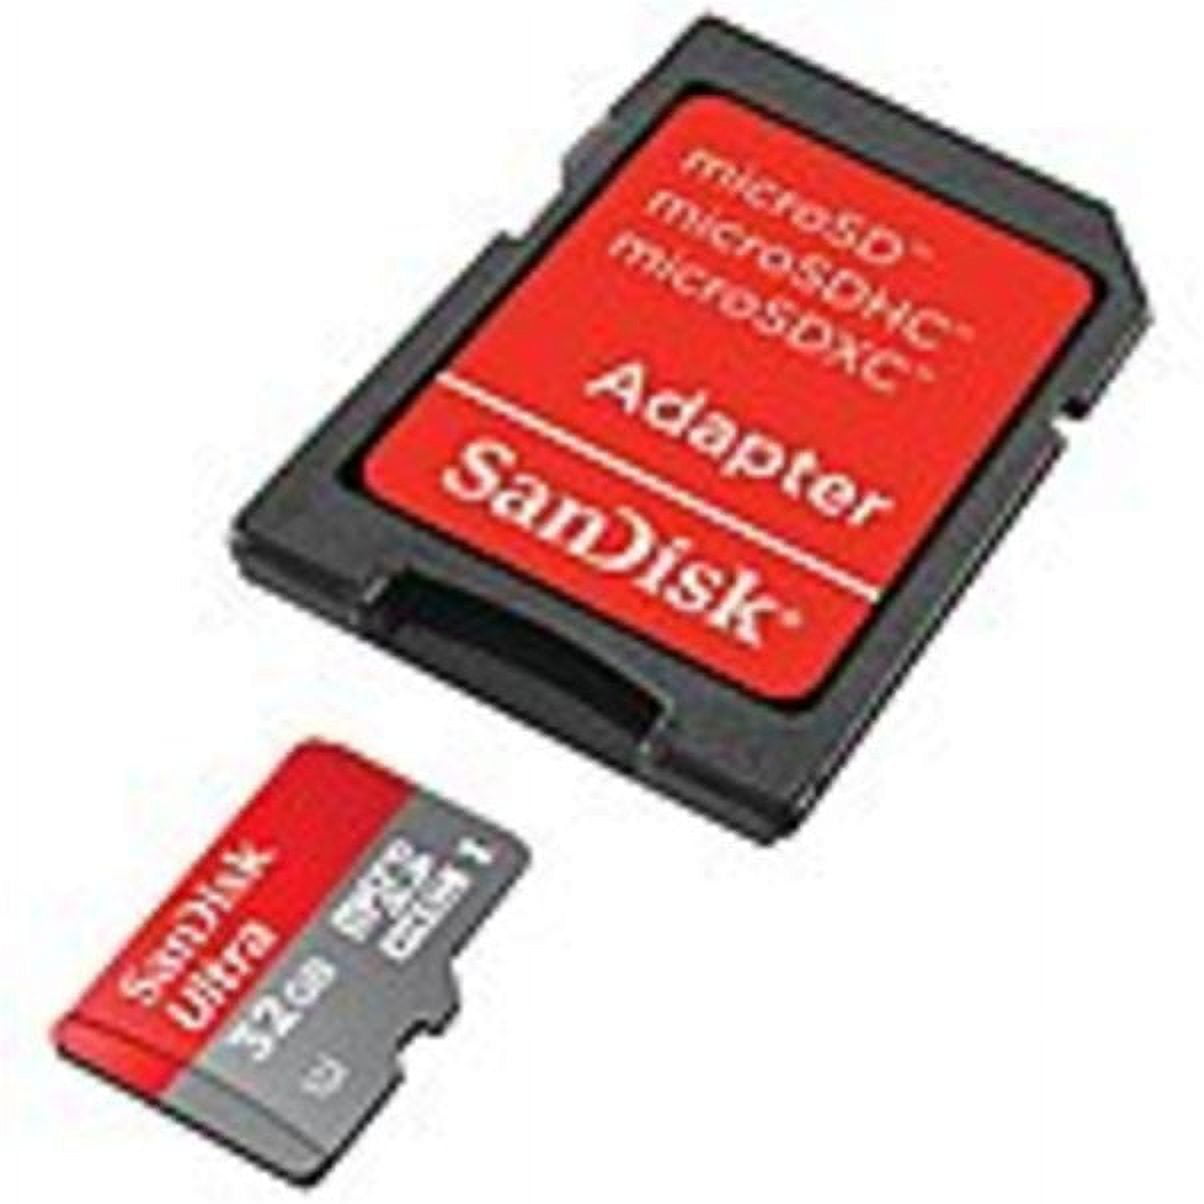 Tarjeta SanDisk Extreme® microSDXC™ UHS-I, 4K UHD, full HD